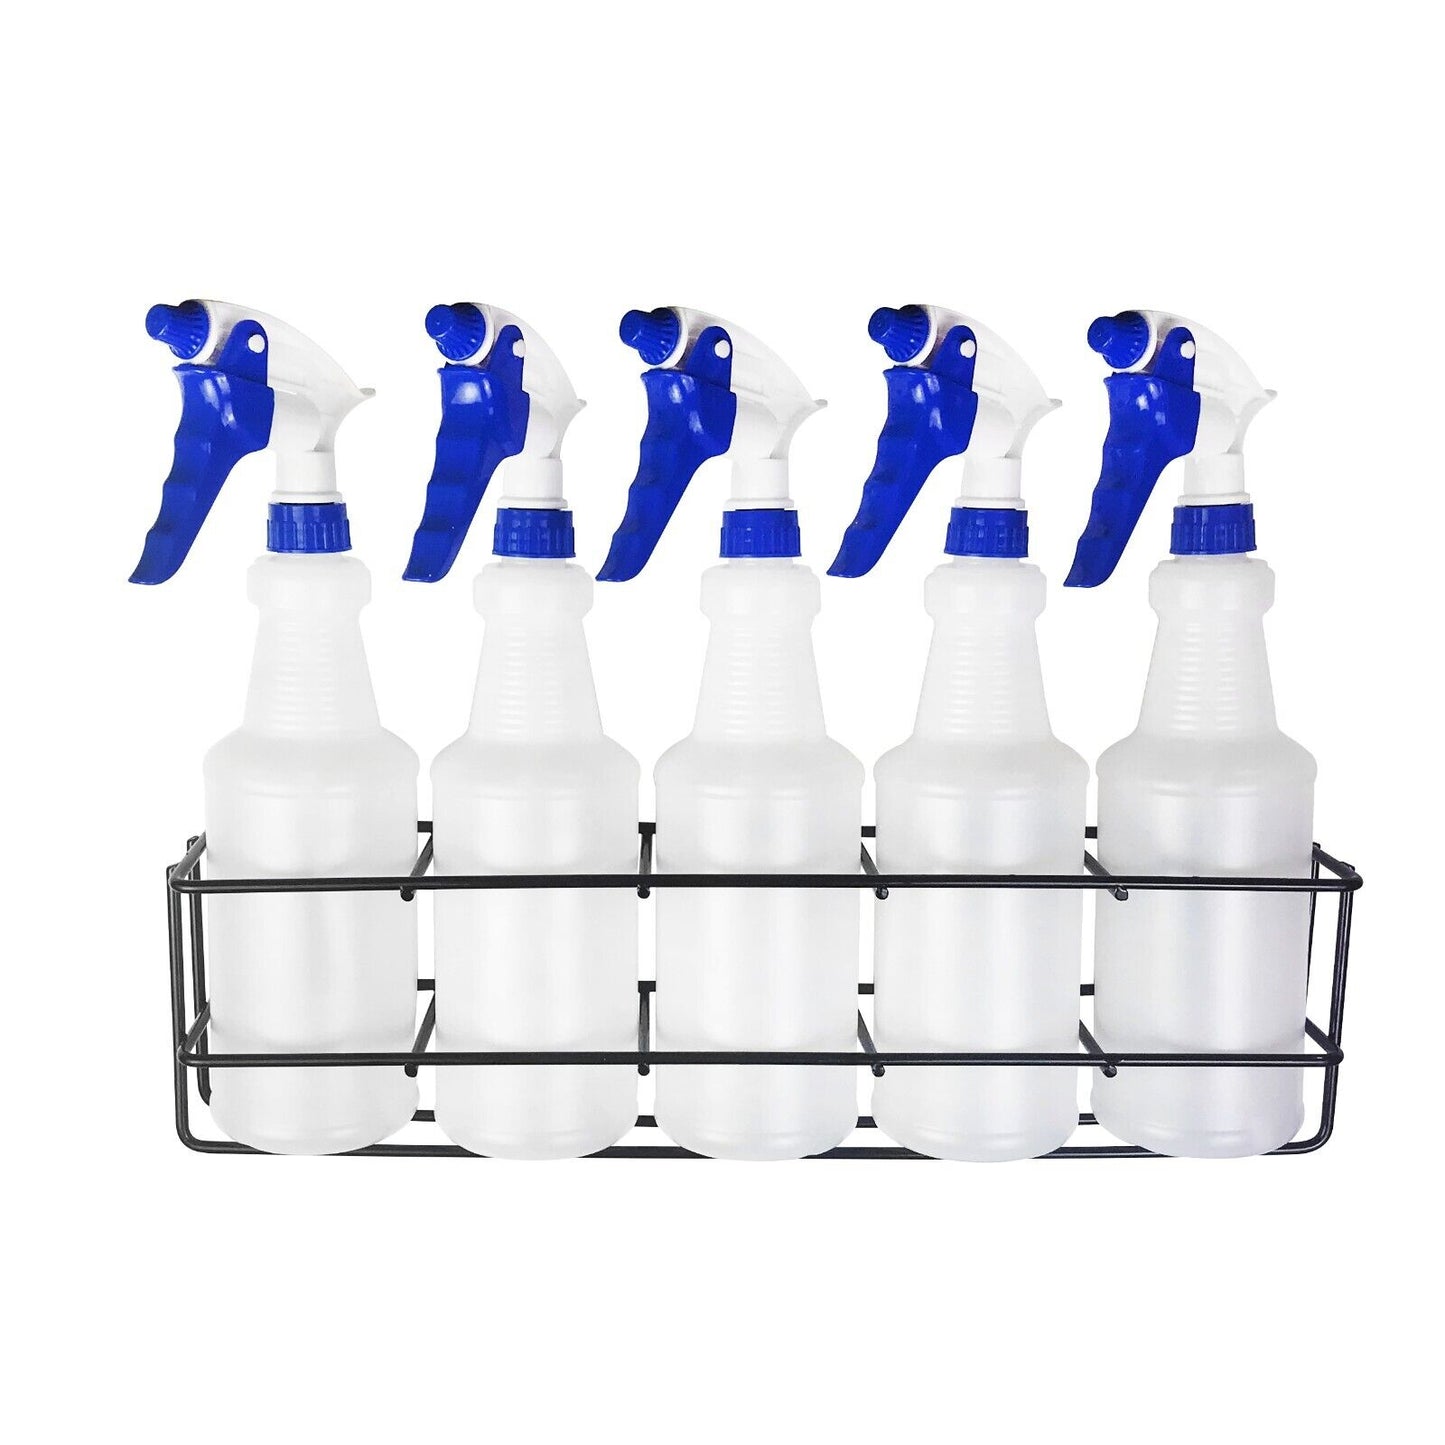 (20)pcs Racks per Case, Wall Rack - Hold 5pcs Quart Spray Bottles, Model#: QSR-5